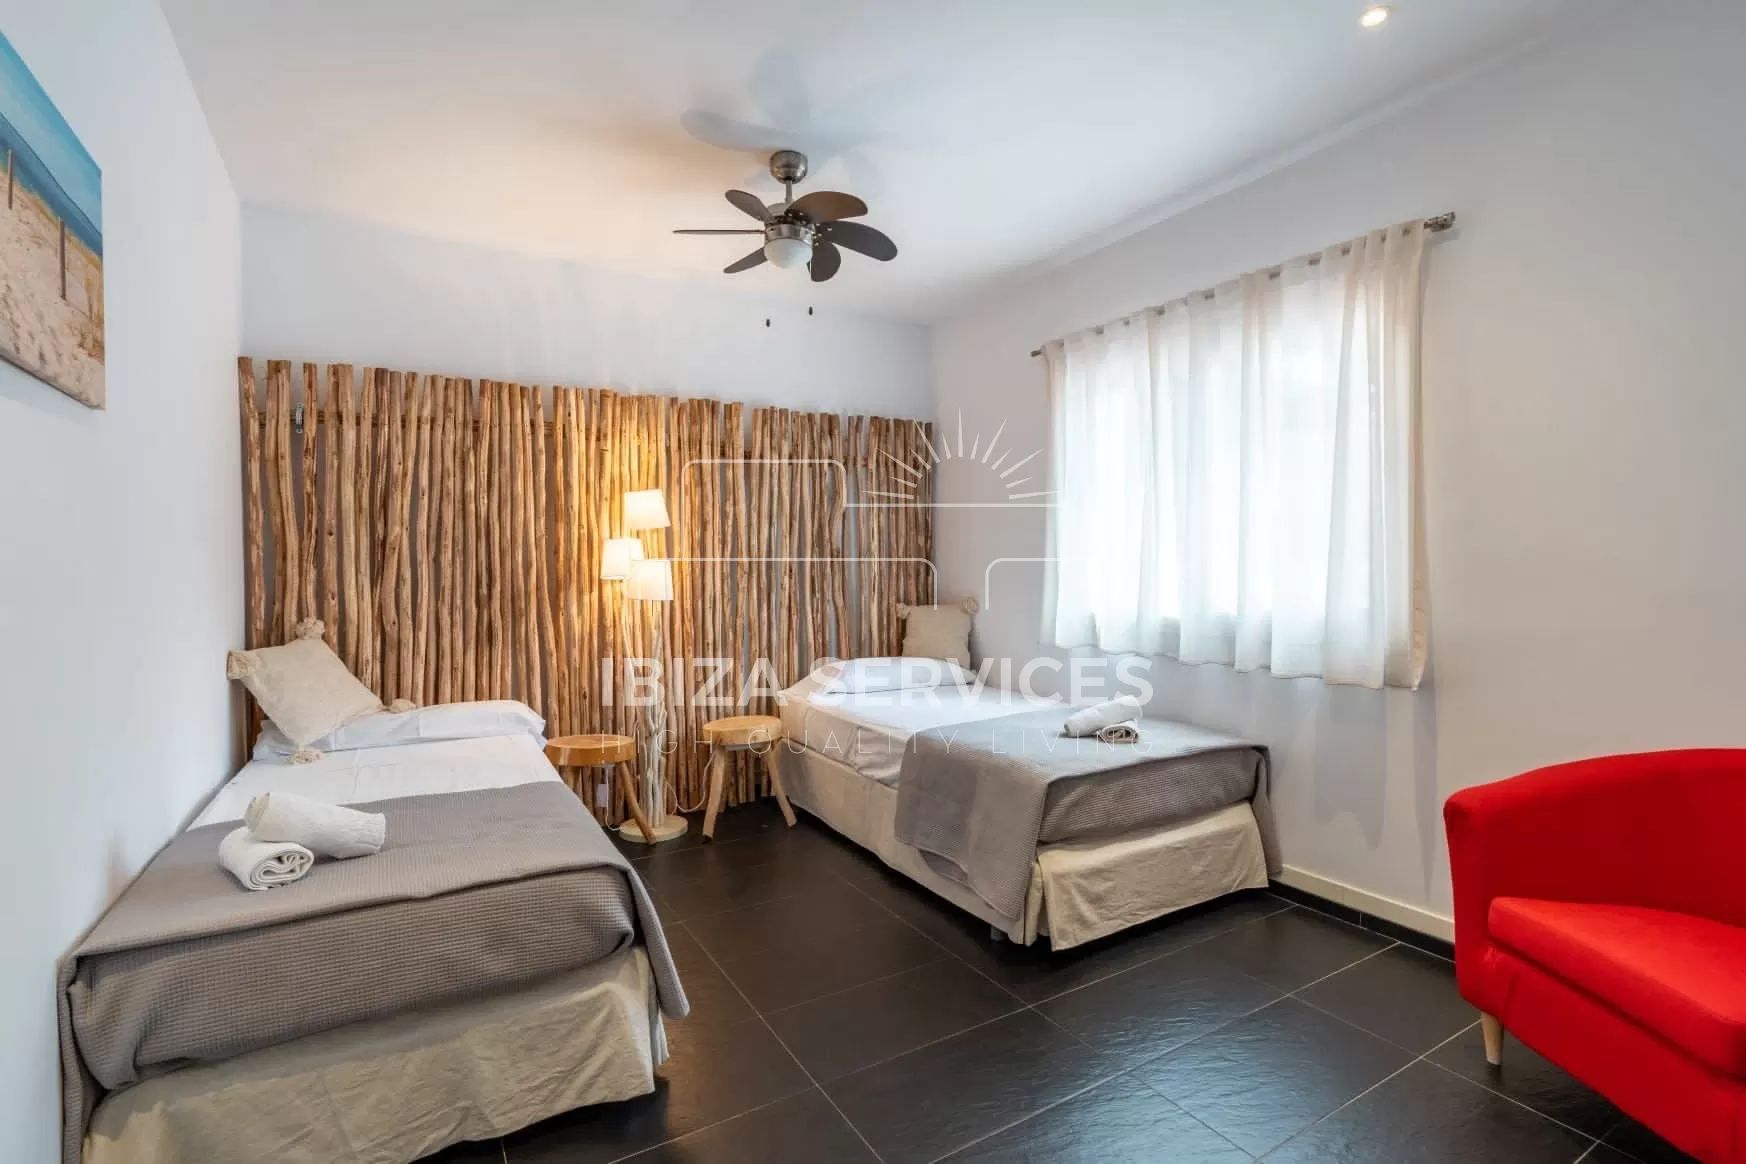 Villa Tranquility 3-Bedrooms Vacation Rental in Roca Lisa